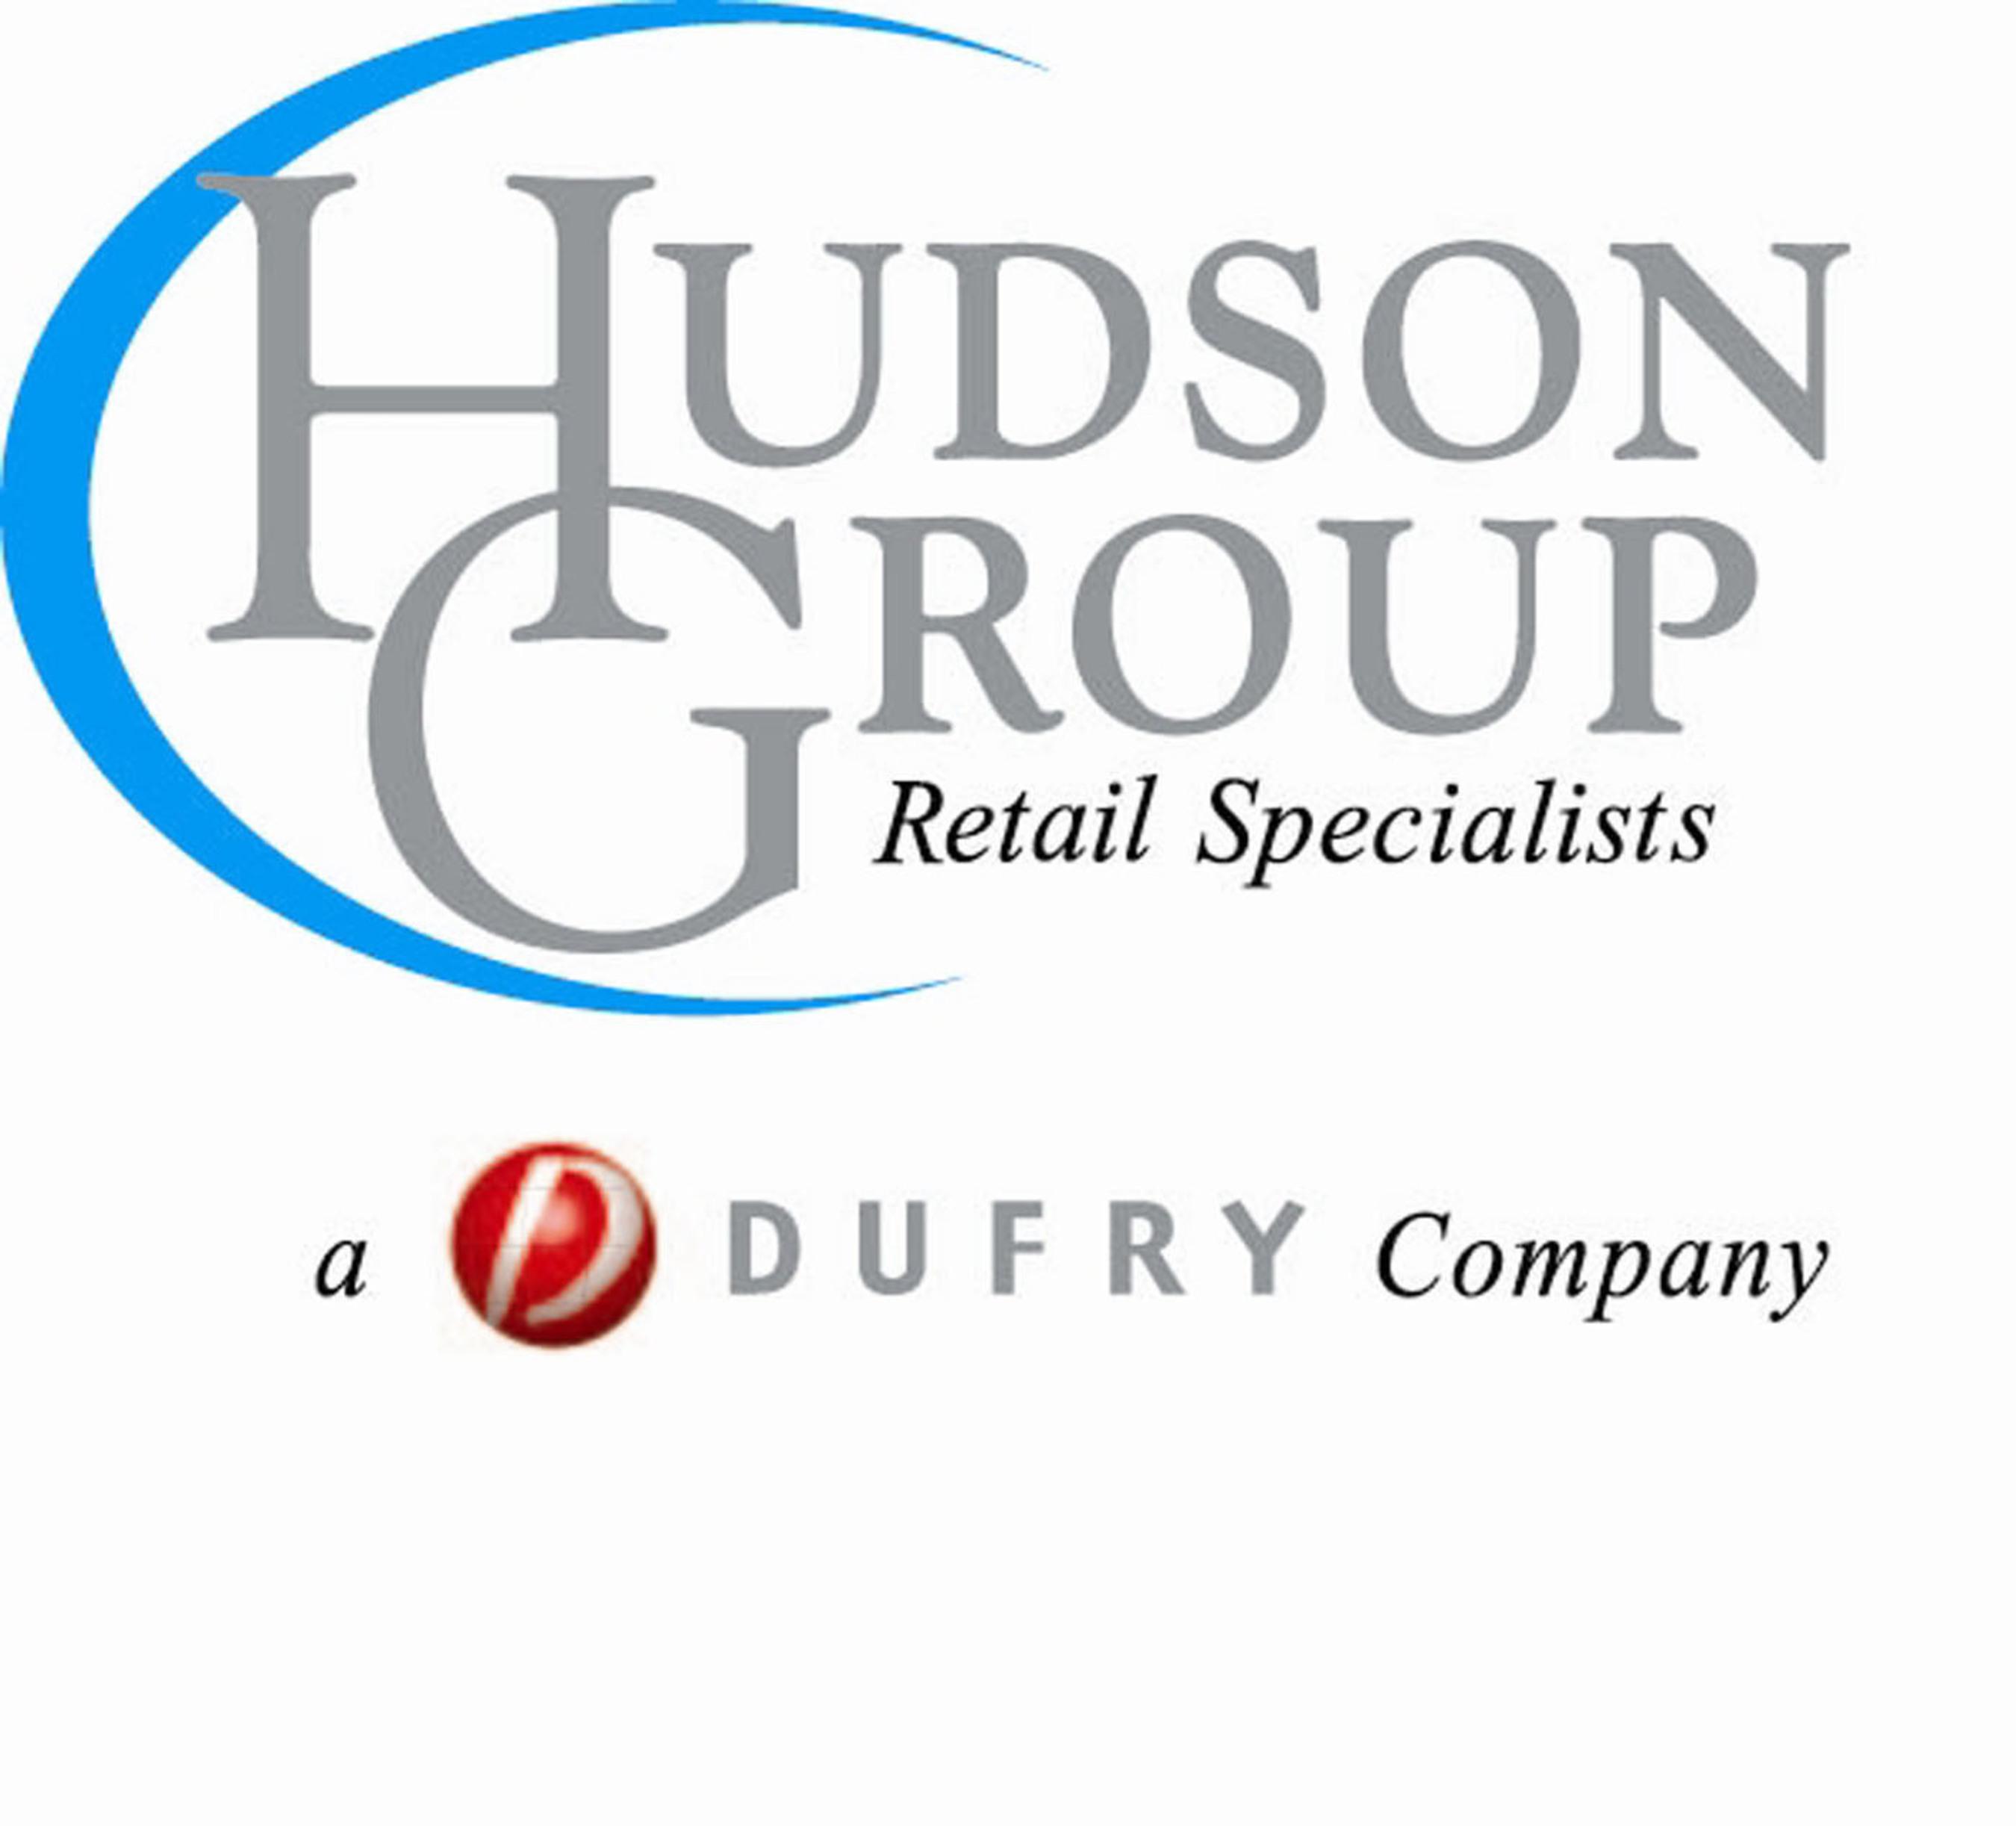 Hudson Logo - HUDSON GROUP LOGO - The Moodie Davitt Report - The Moodie Davitt Report